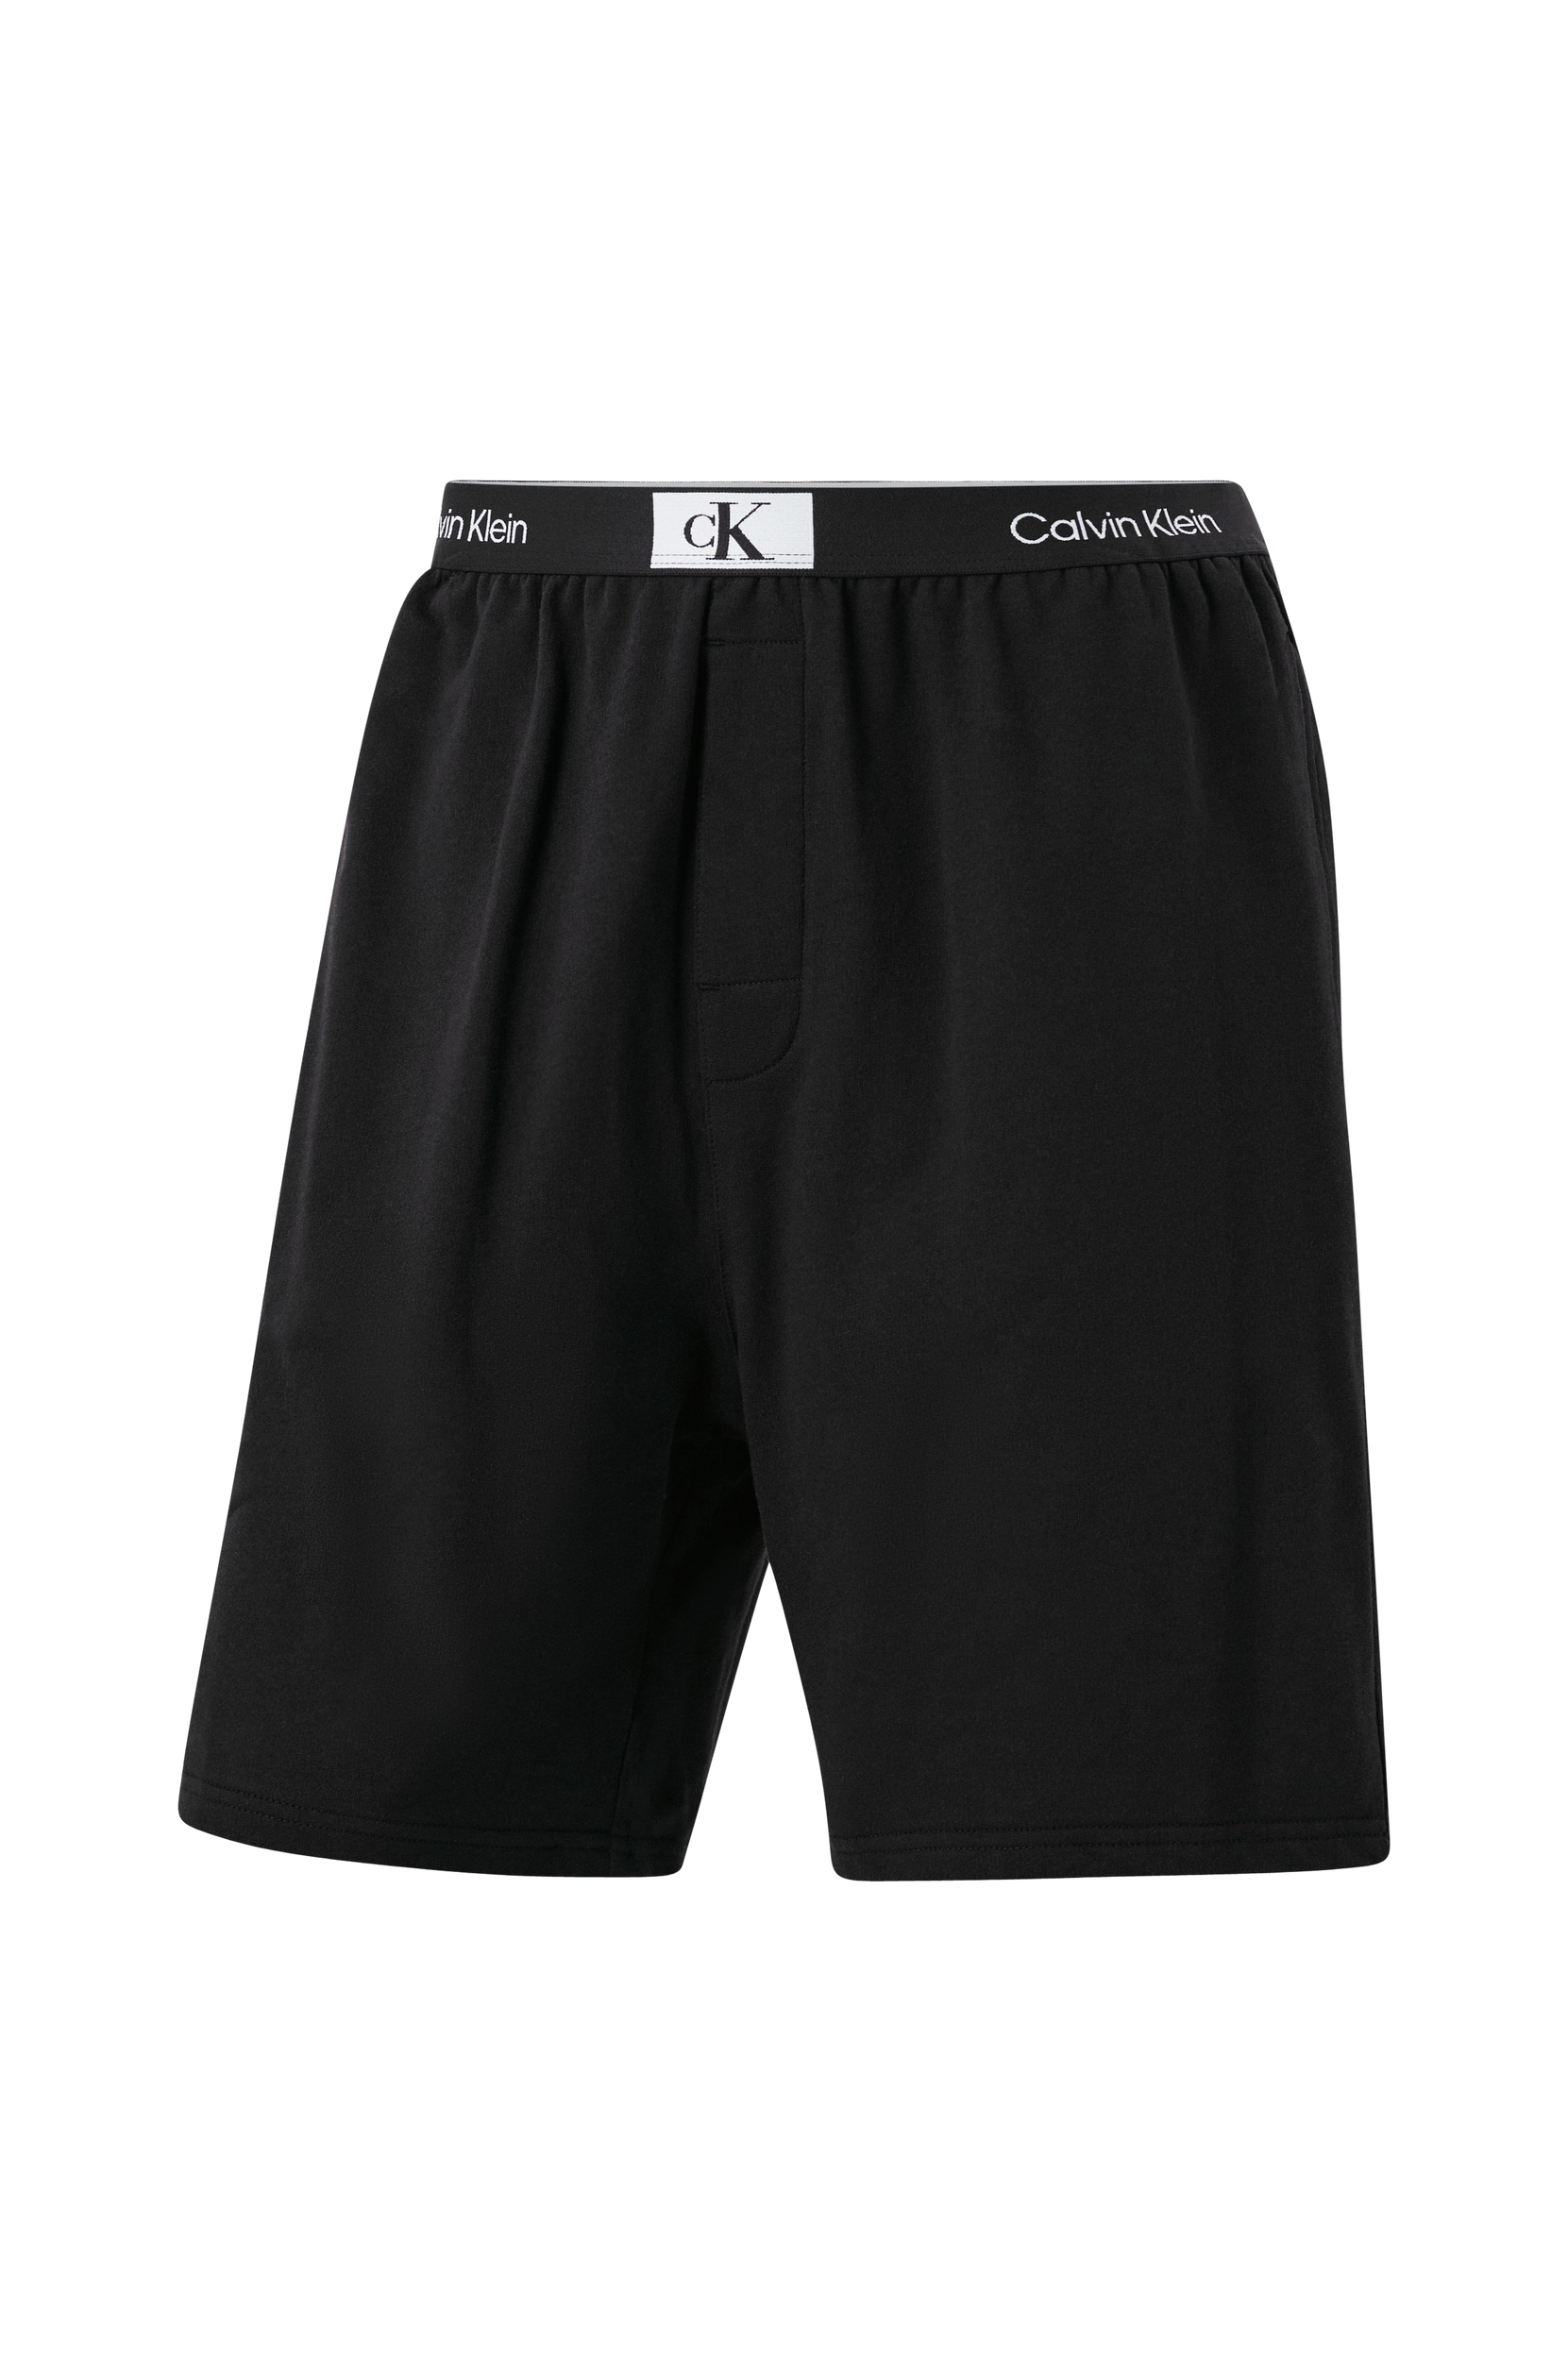 Calvin Klein - Shorts/pyjamasshorts Sleep Short - Sort - XL